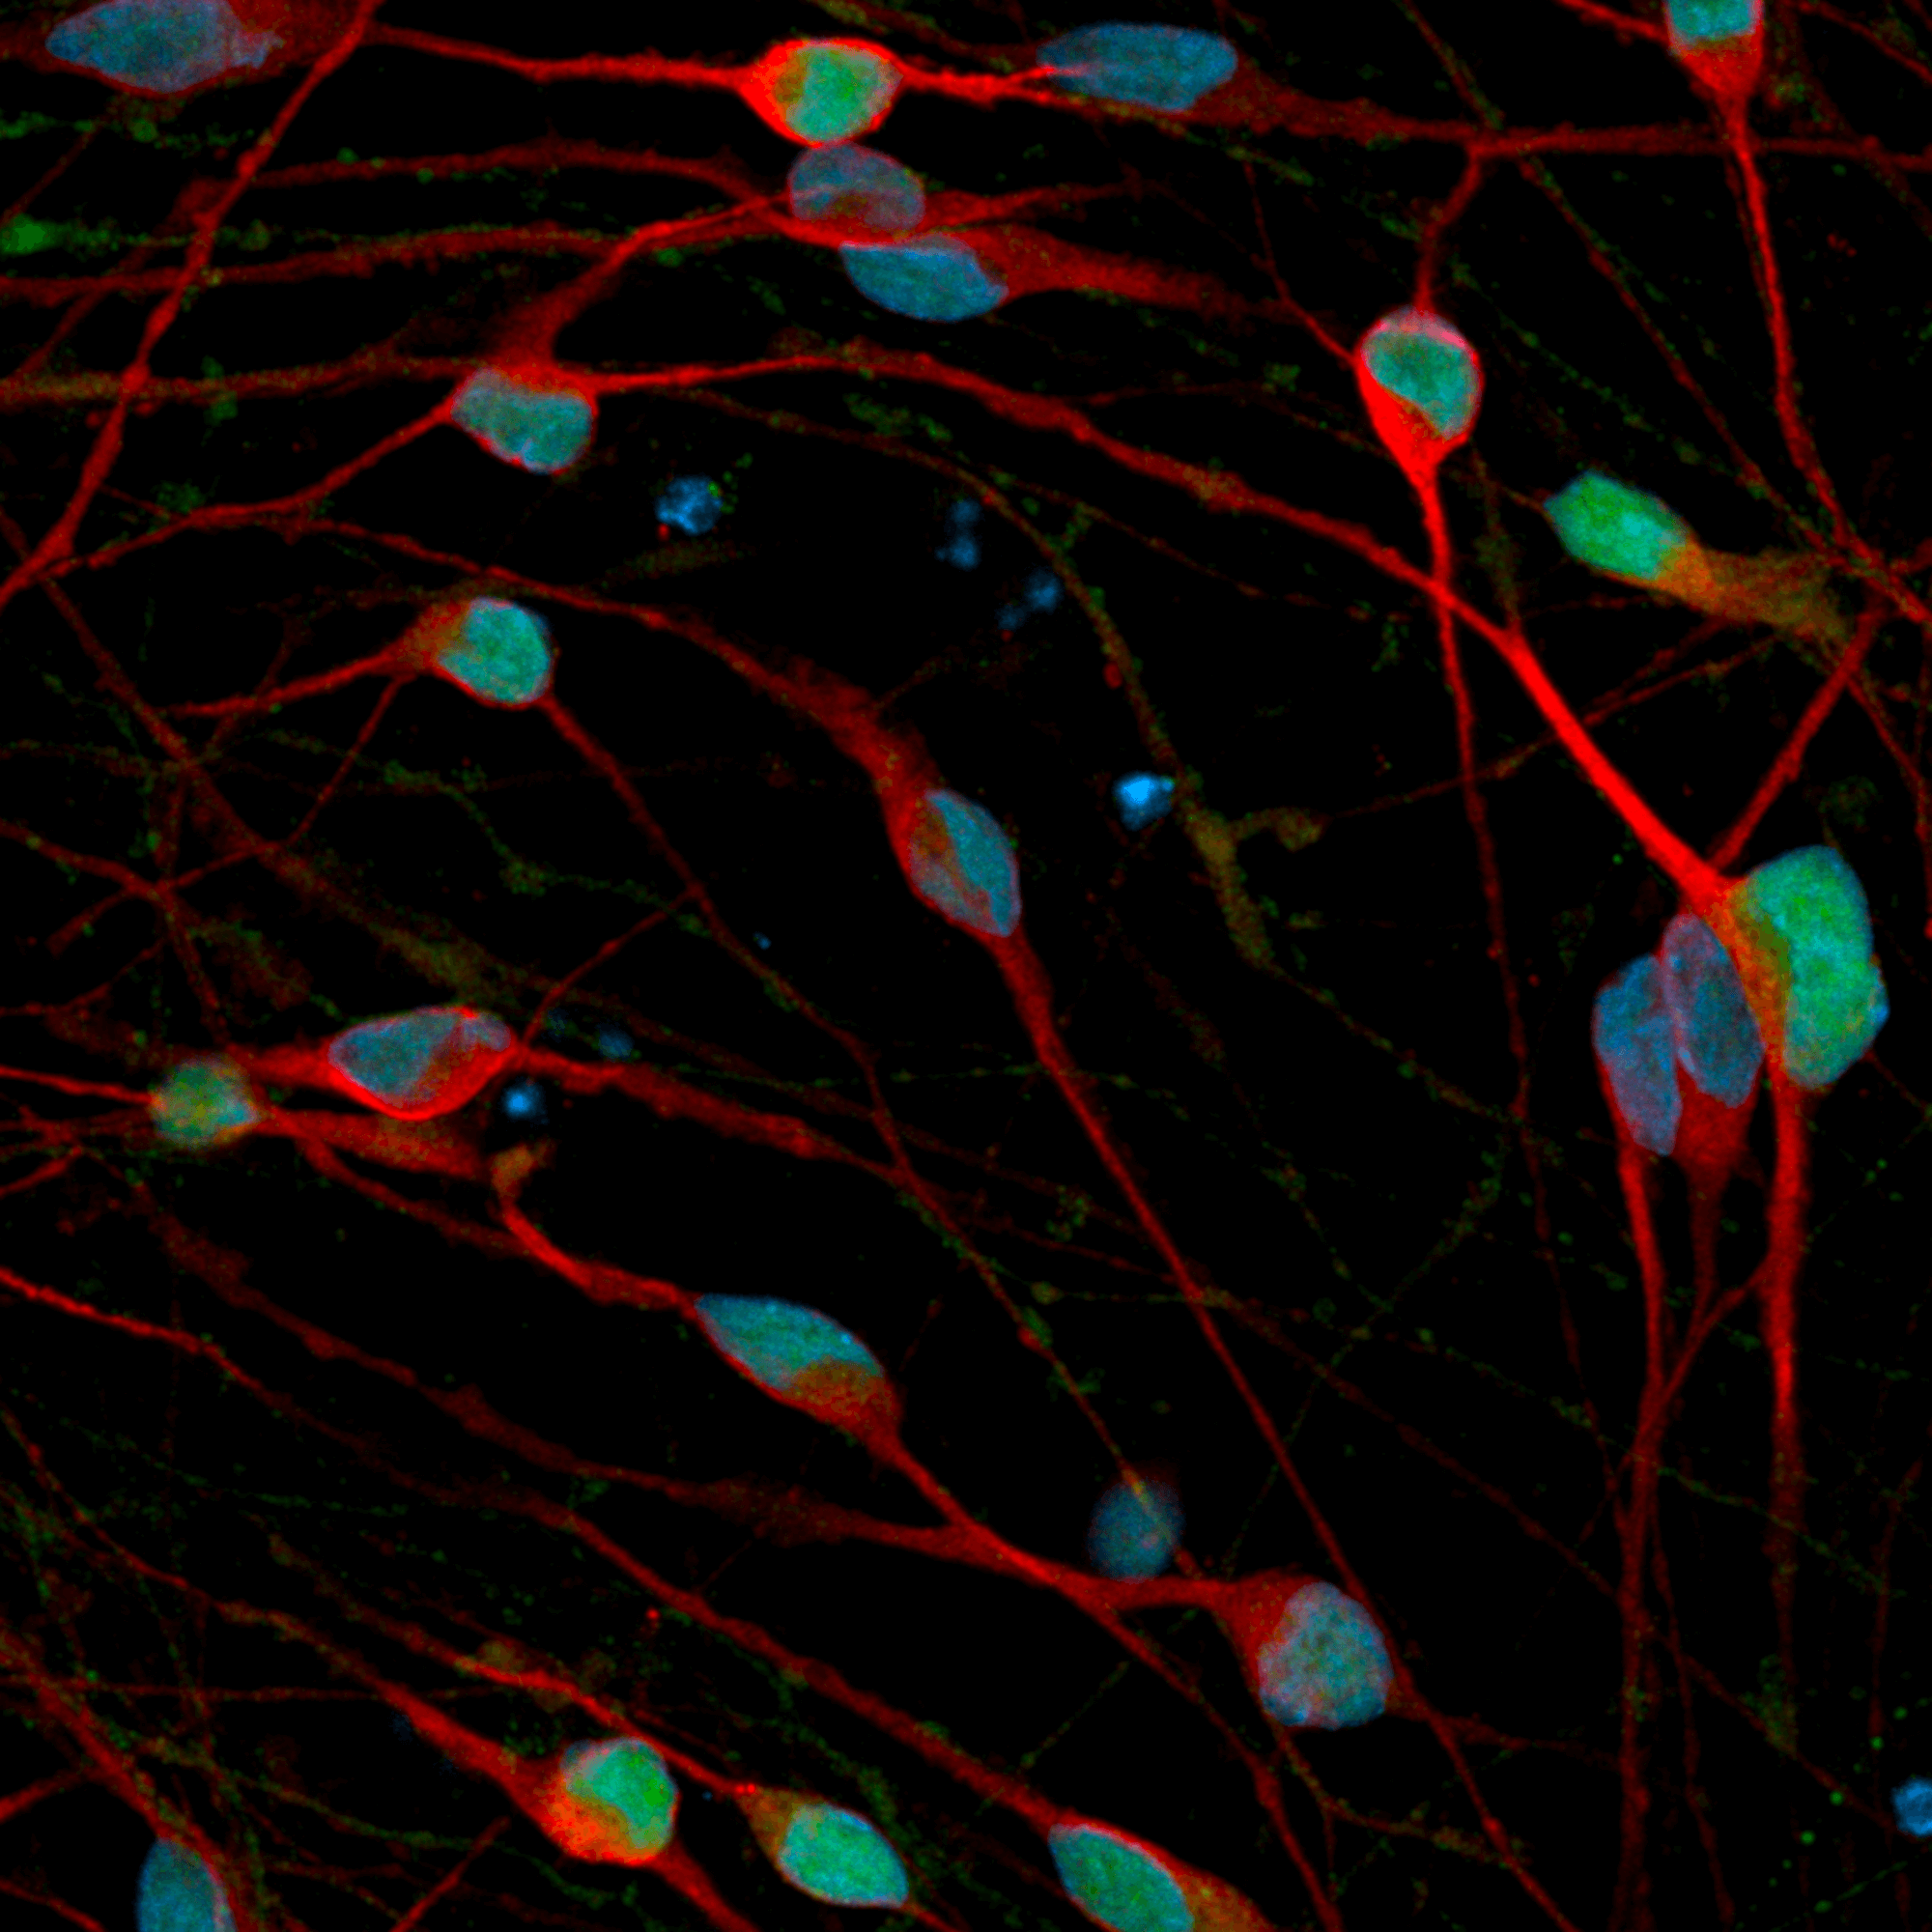 ioGABAergic Neurons™ and related disease models